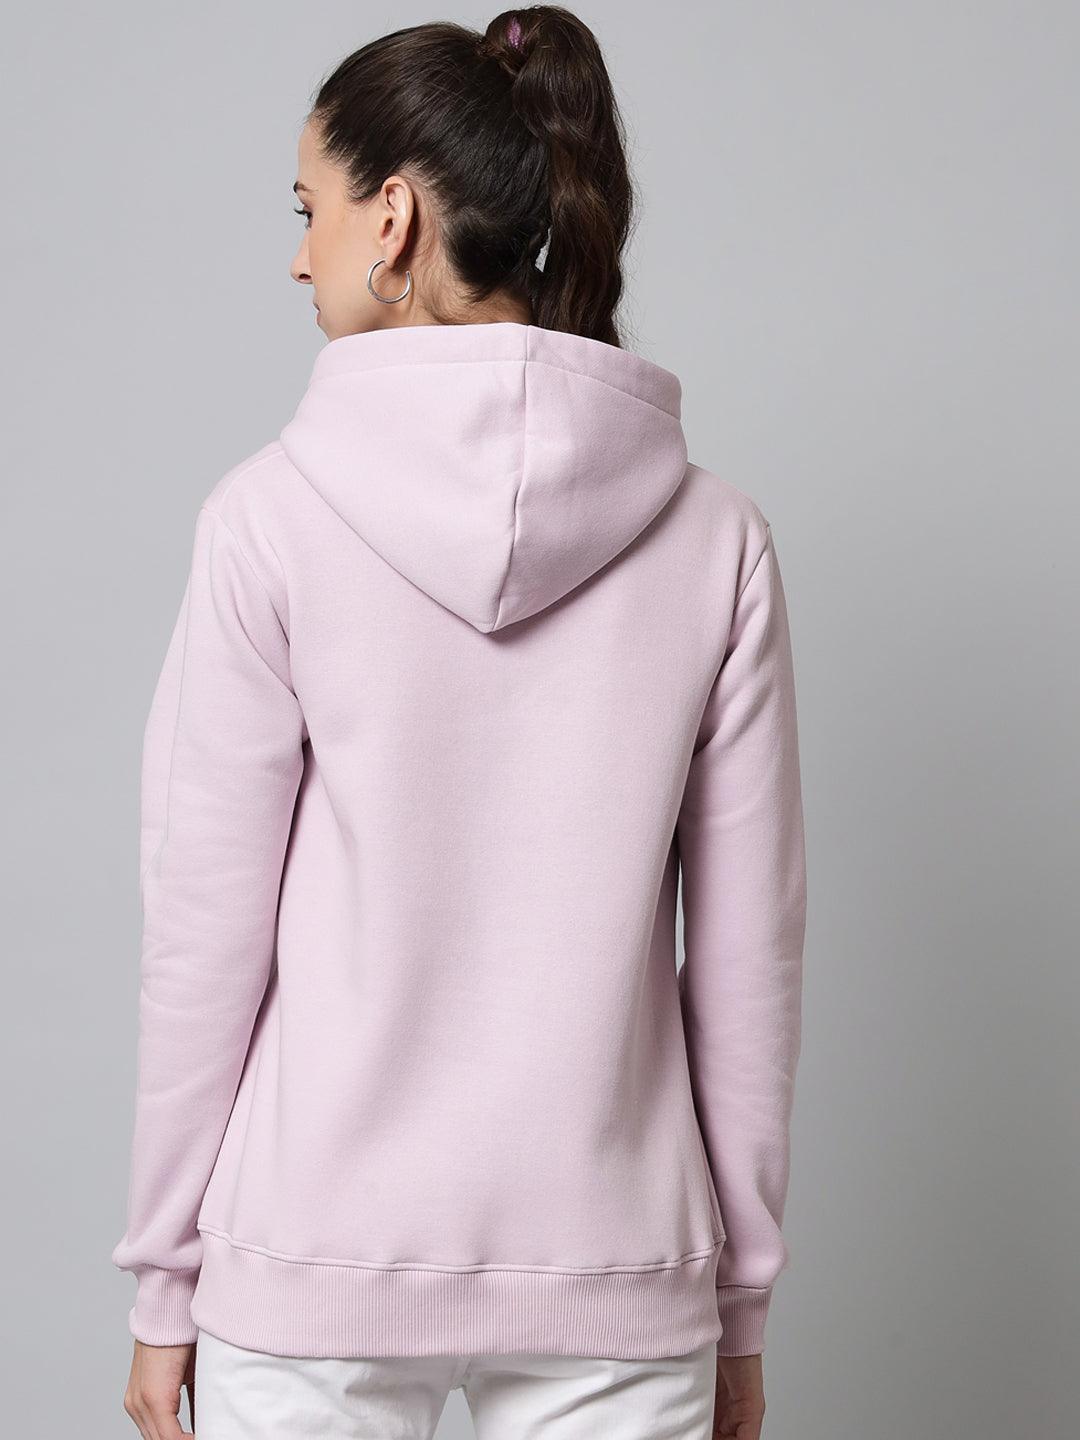 Griffel Women’s Smily Print Cotton Fleece Full Sleeve Light Purple Hoodie Sweatshirt - griffel